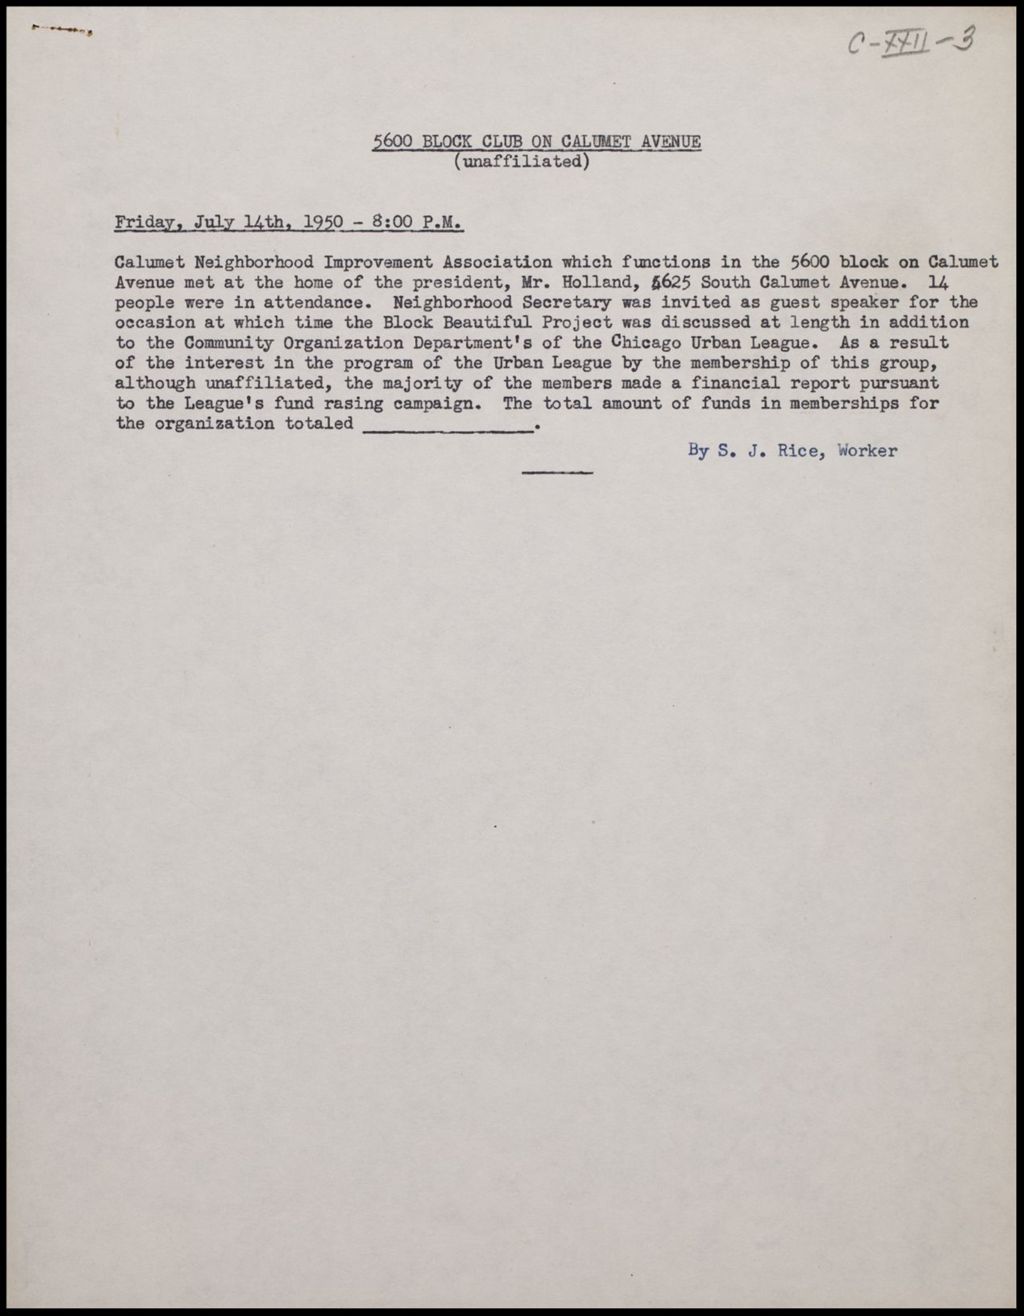 Miniature of Block Club Reports - Abbottsford Council, 1950-1954 (Folder II-2297)